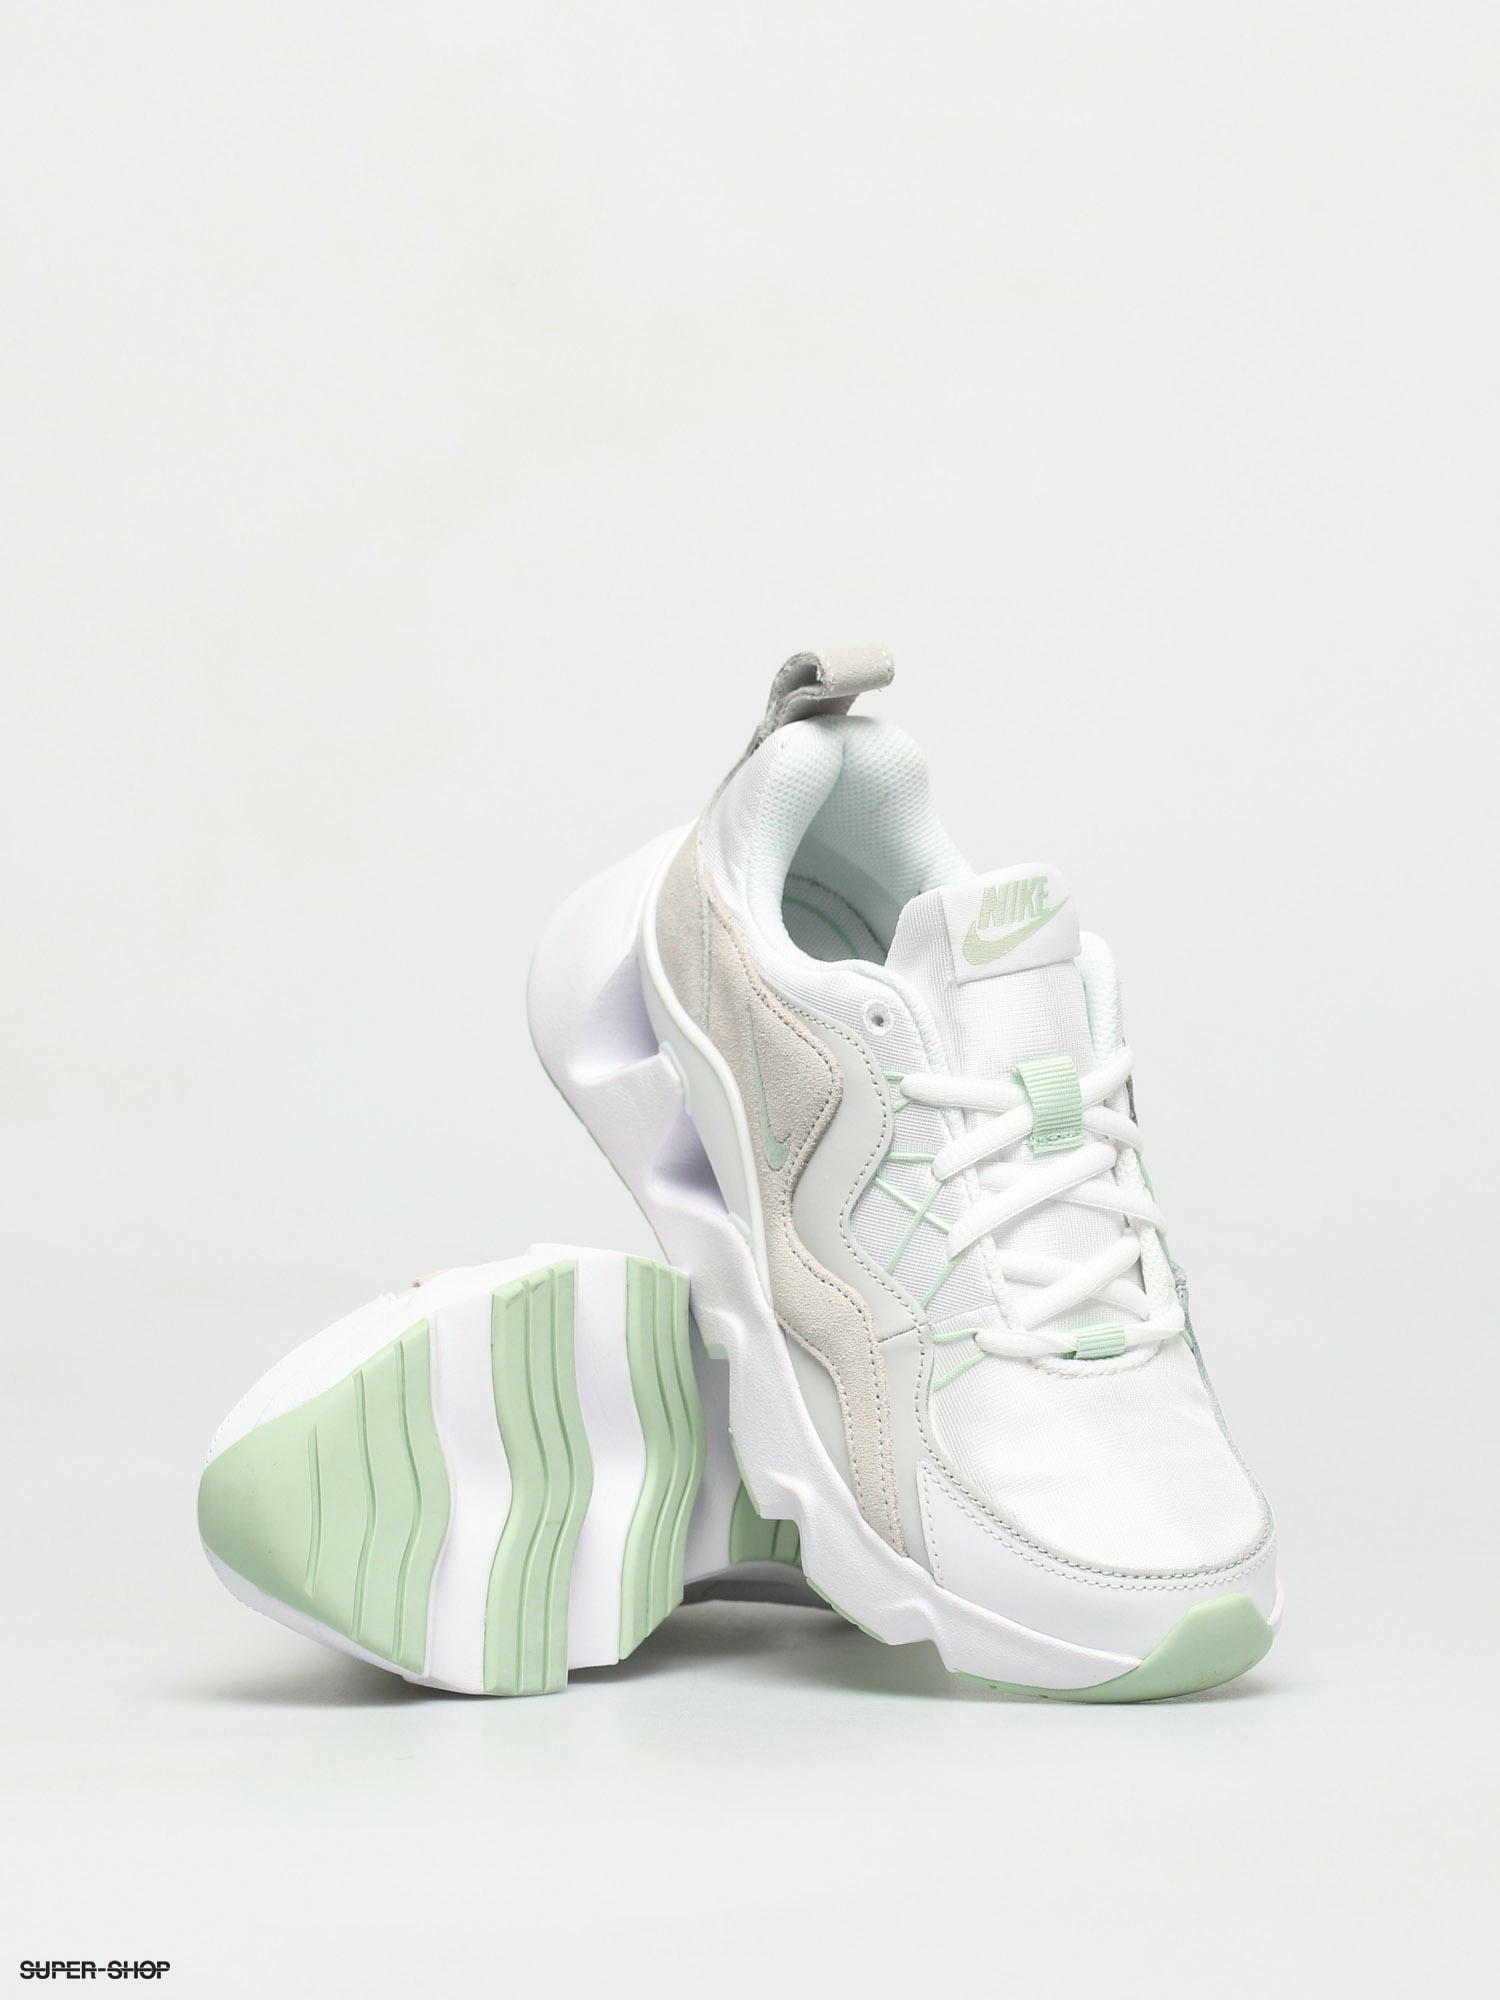 nike ryz 365 white and green sneakers